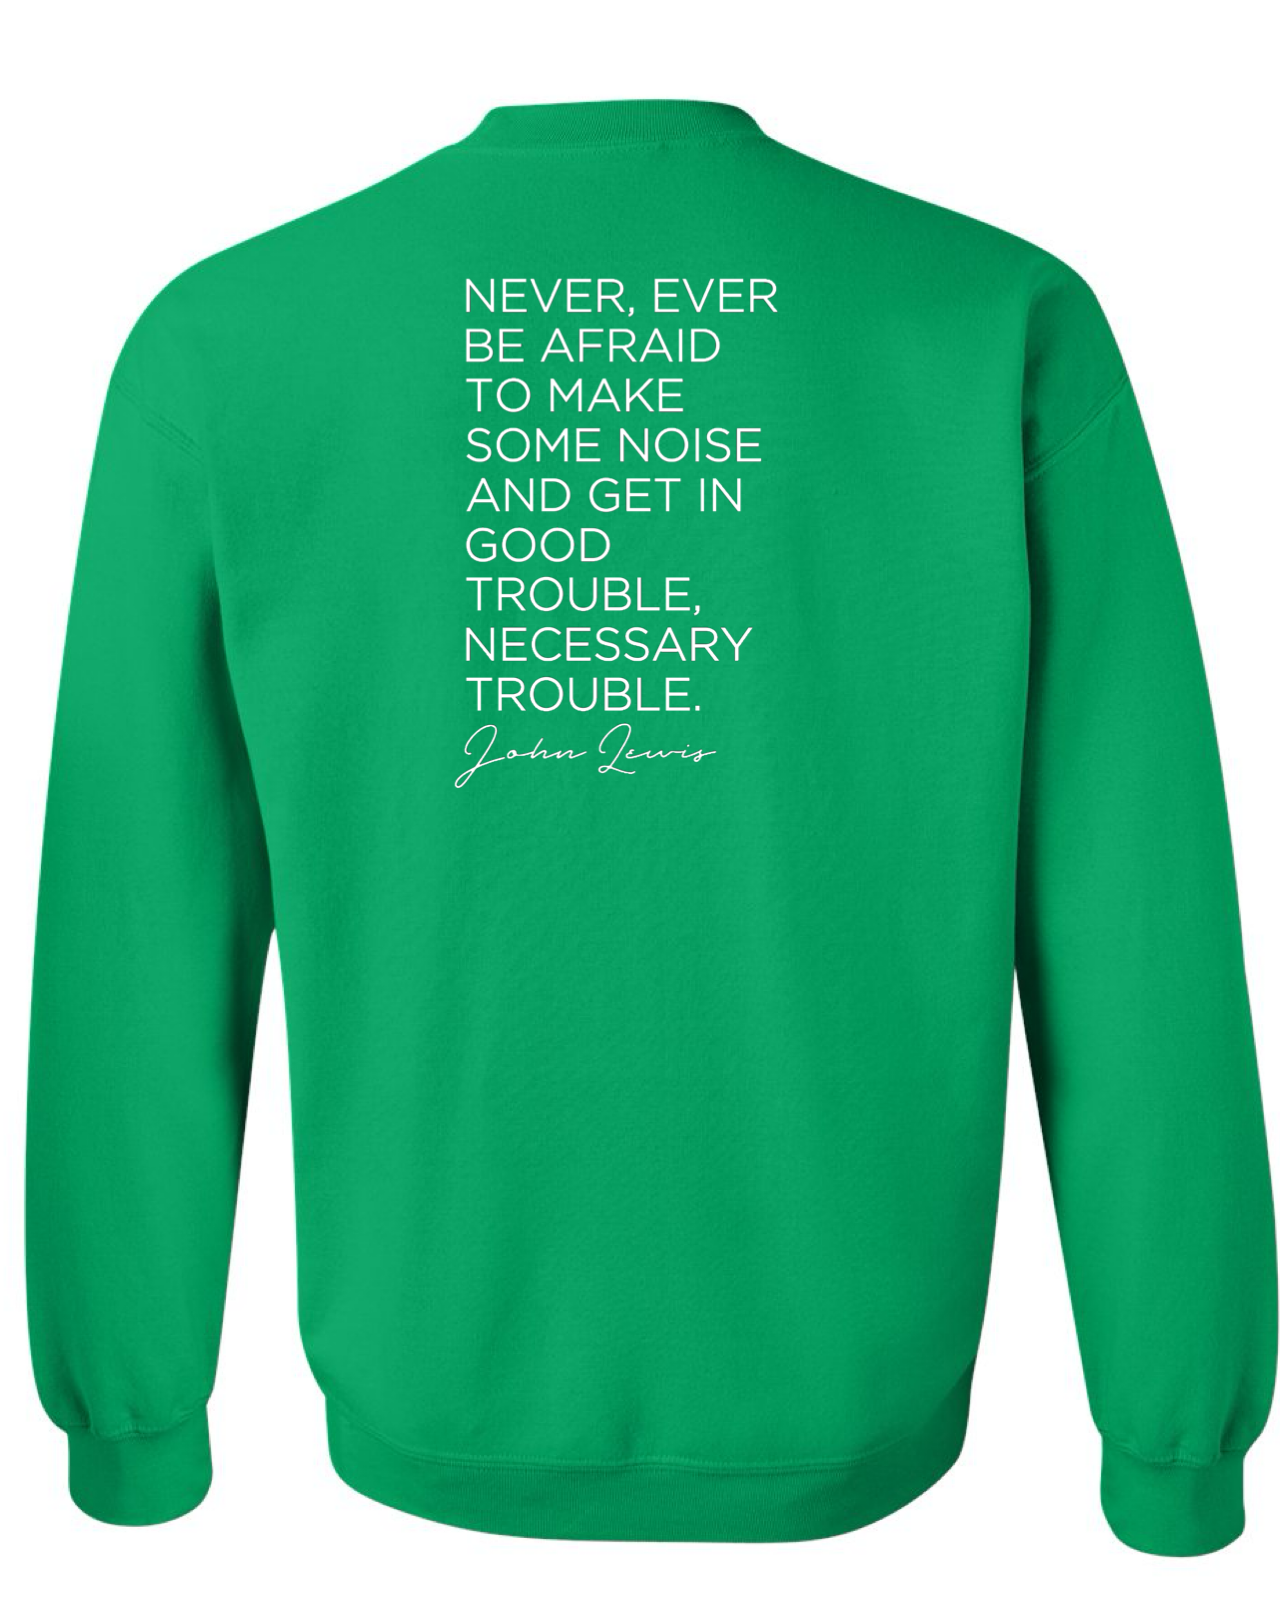 Mens's  Trouble Maker - Good Trouble  Crewneck Sweatshirt